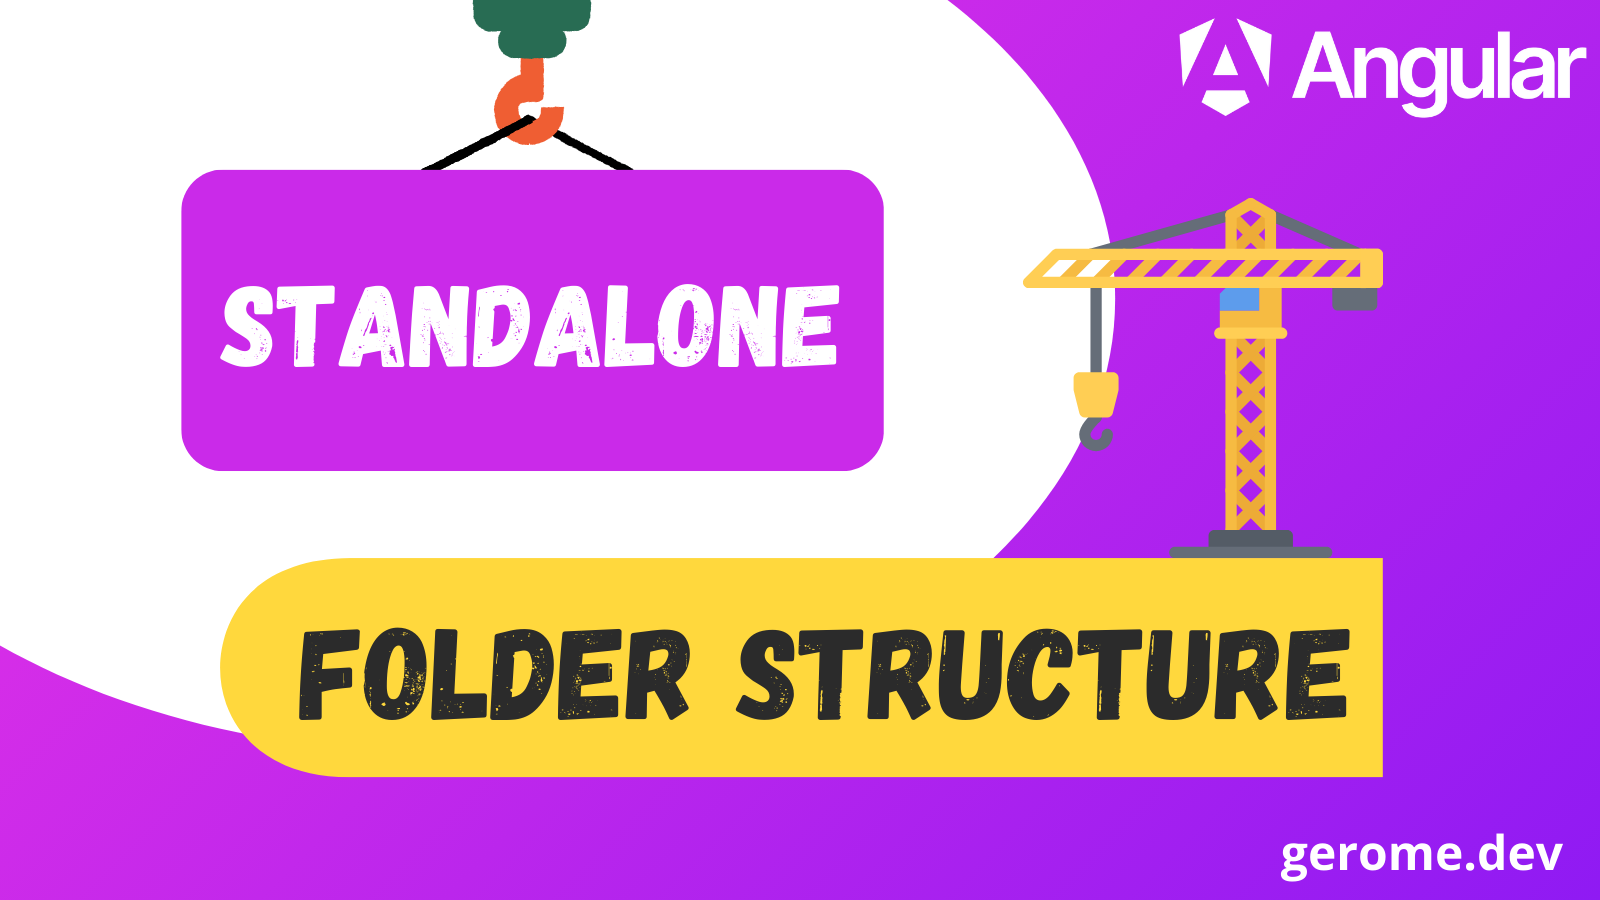 Standalone Angular folder structure